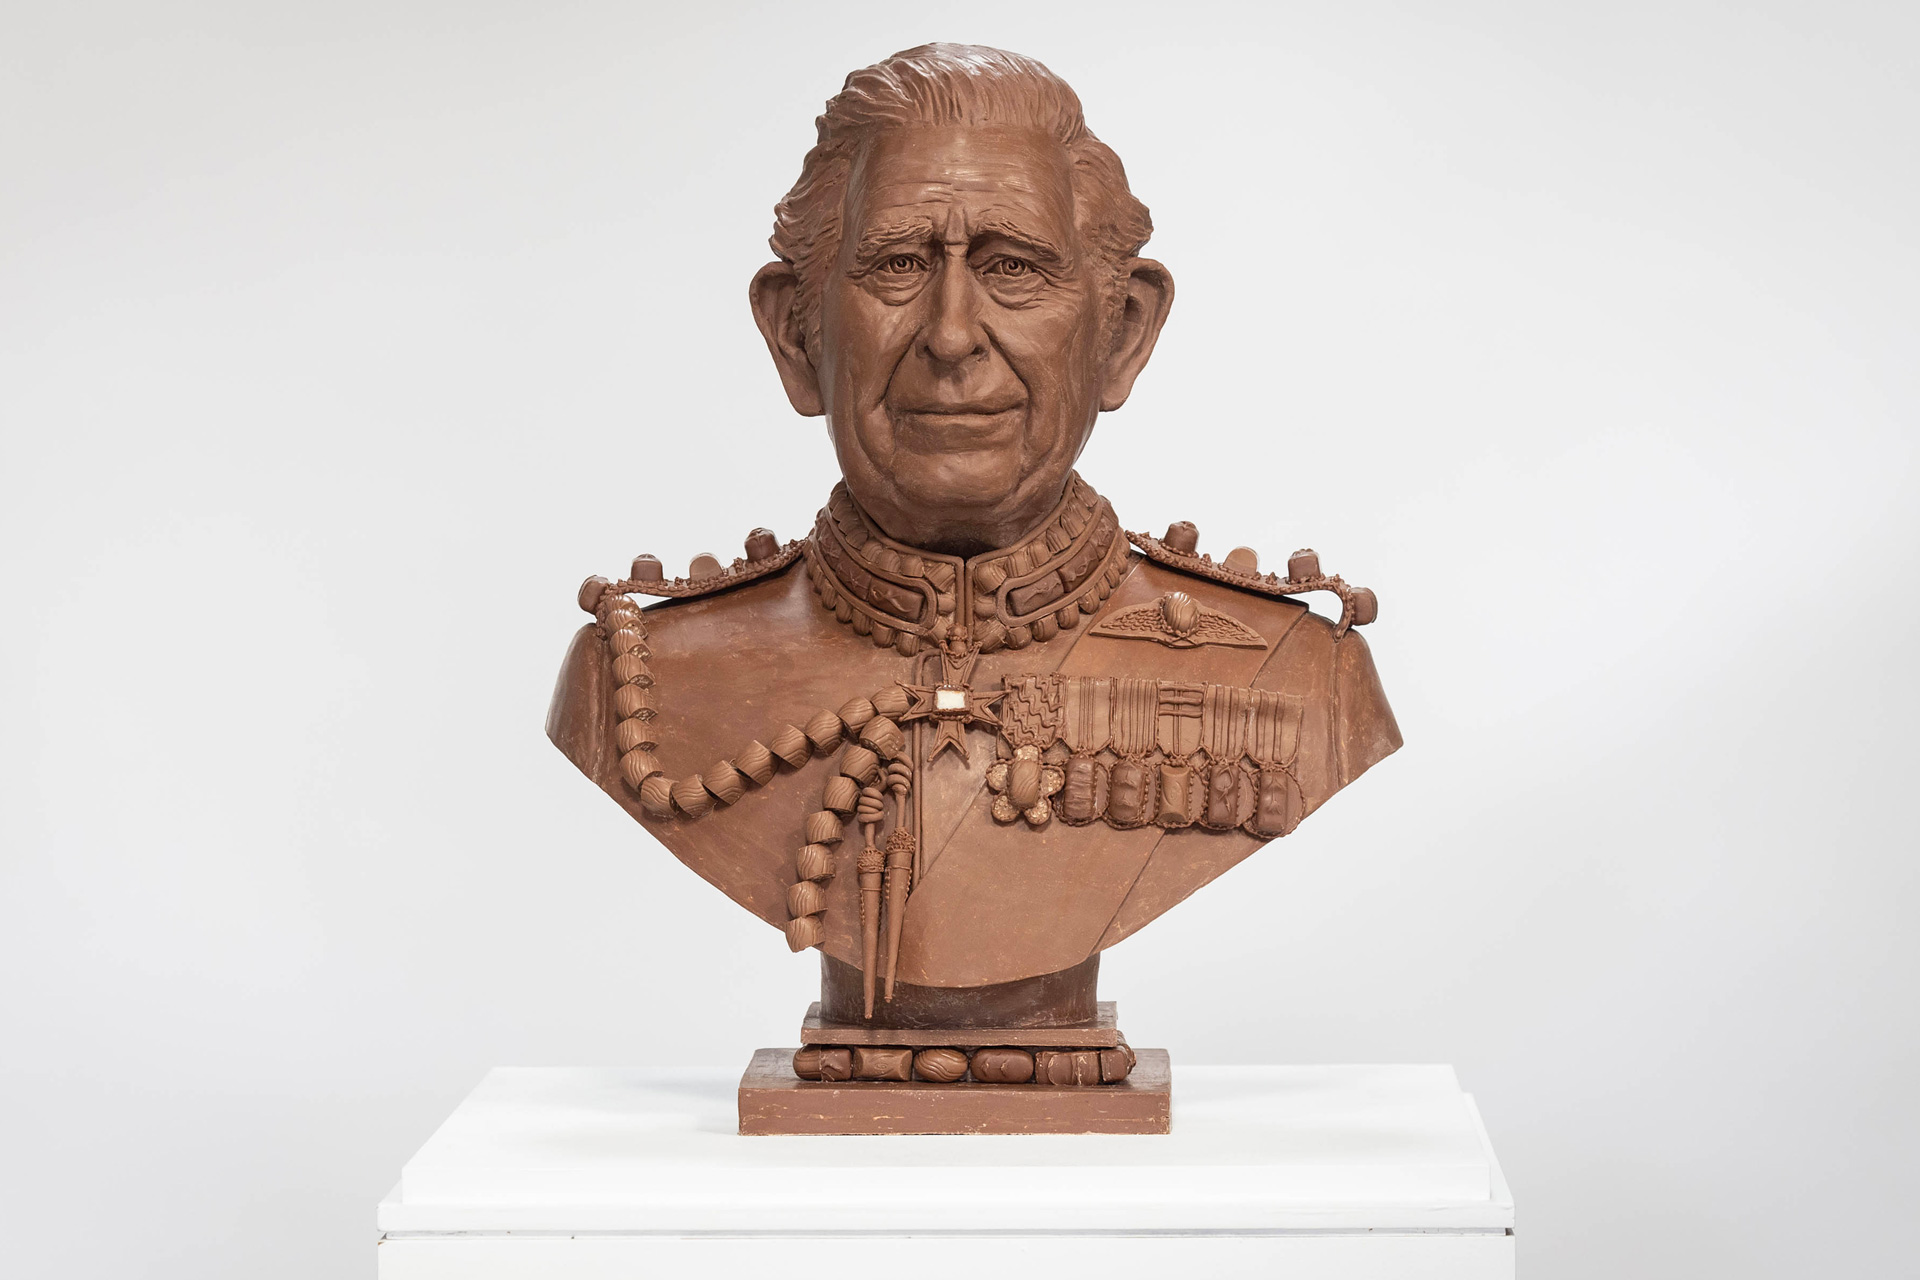 Chocolate sculpture of King Charles III